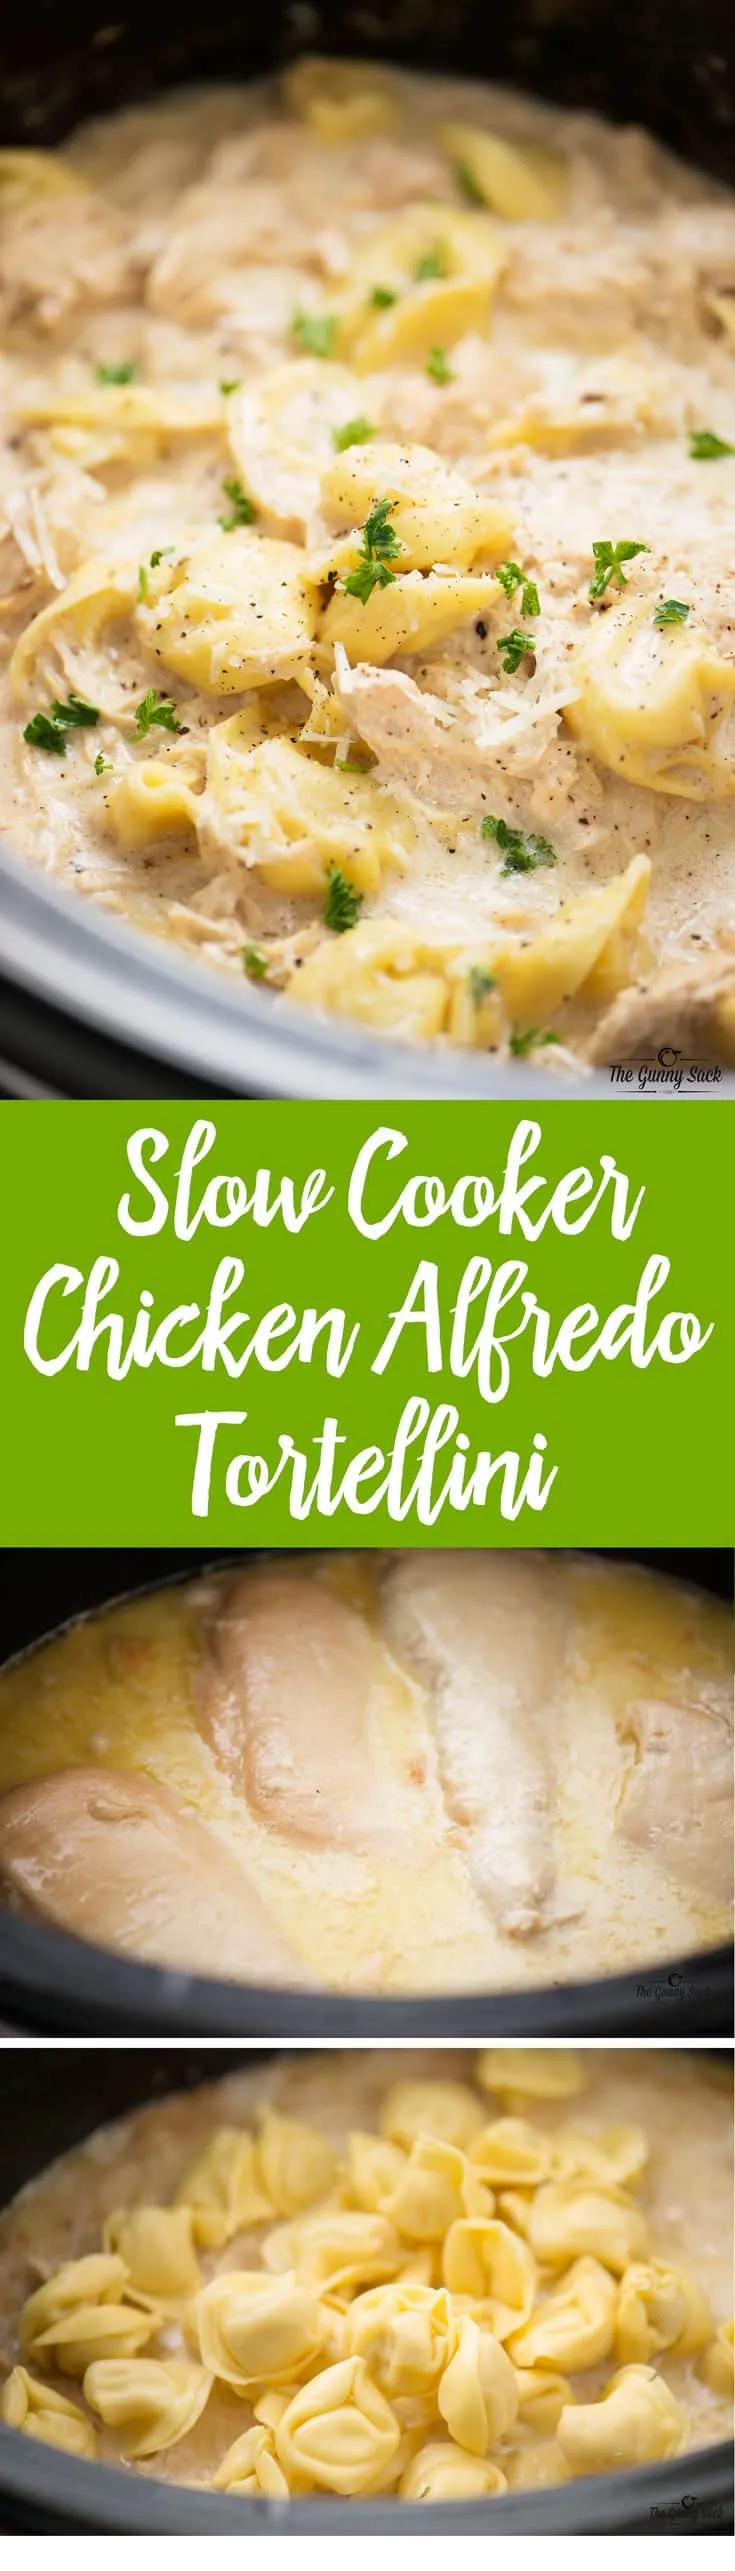 Slow Cooker Chicken Alfredo Tortellini - The Gunny Sack